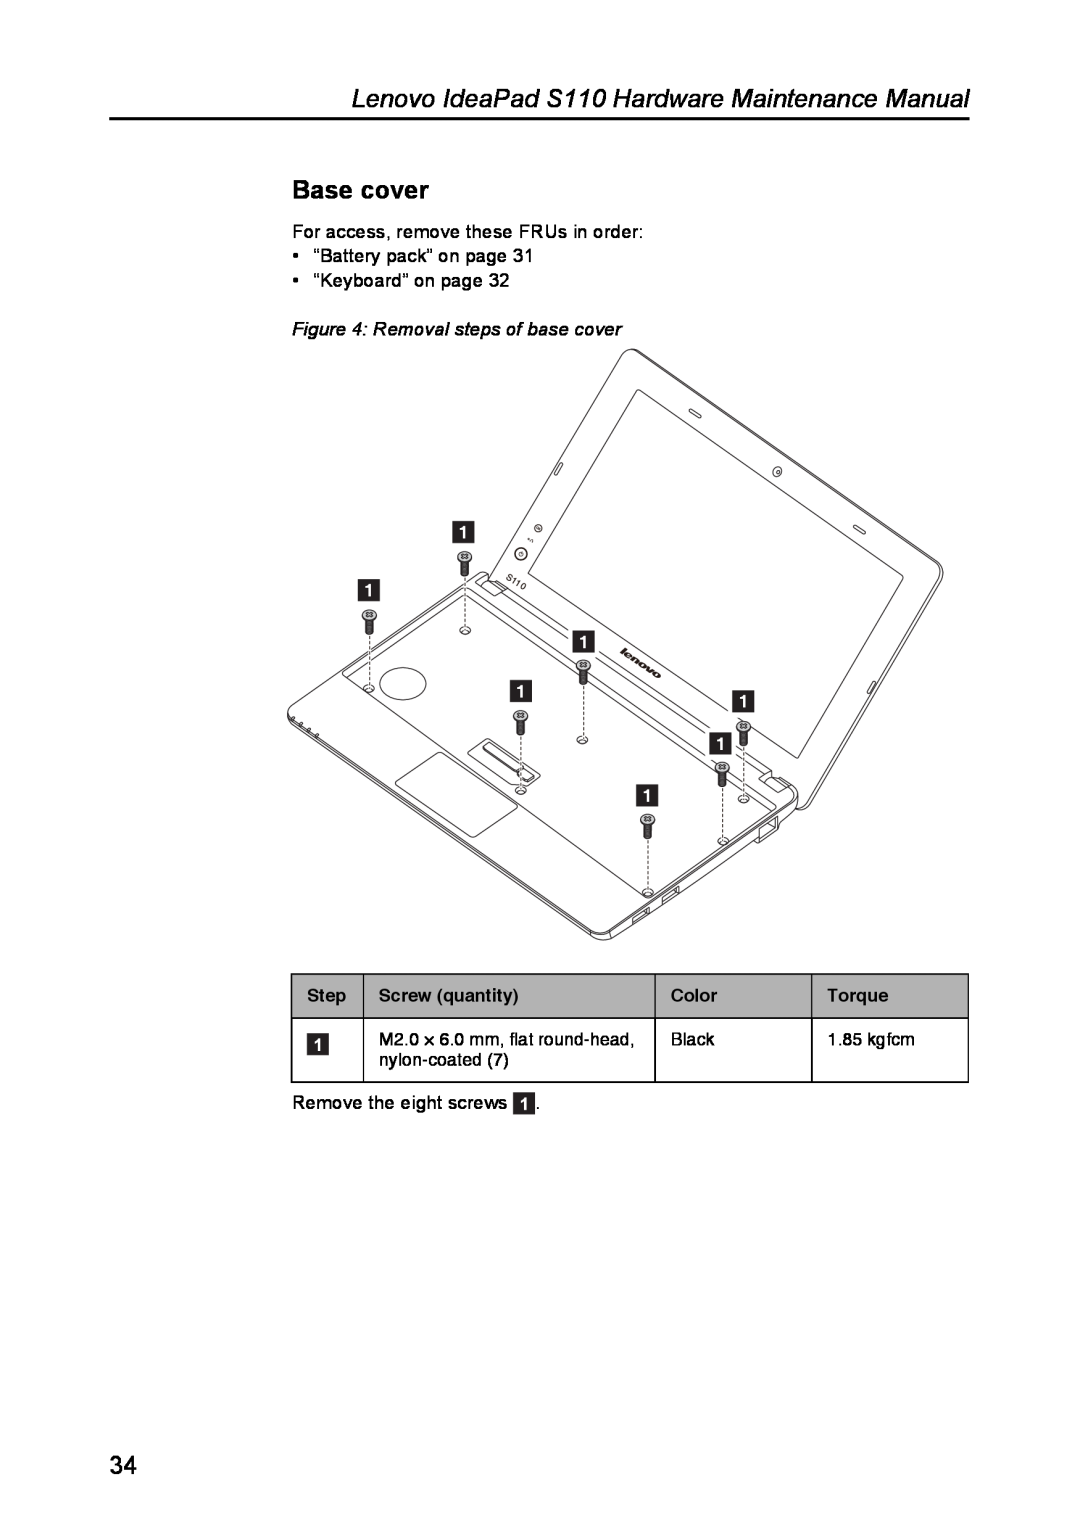 Lenovo Base cover, Removal steps of base cover, Lenovo IdeaPad S110 Hardware Maintenance Manual, Step, Screw quantity 